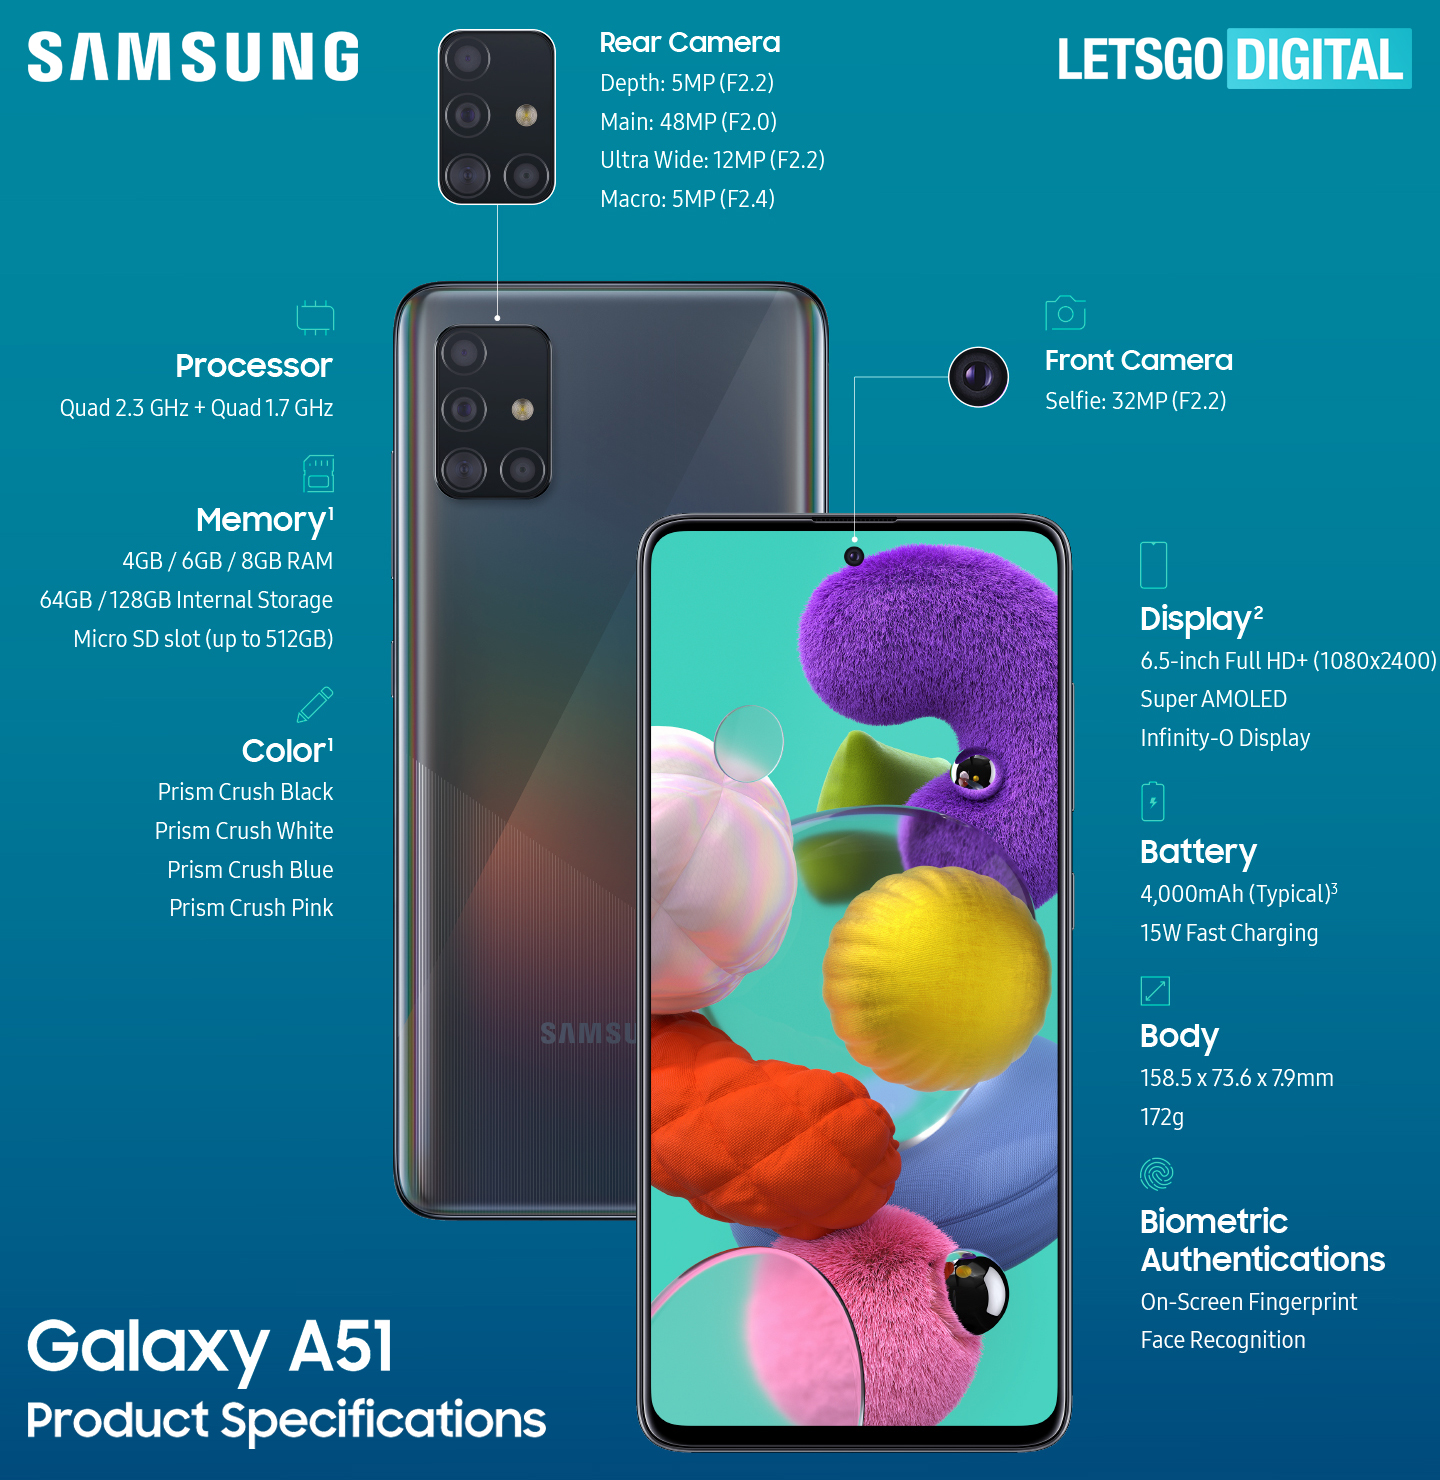 Смартфон Samsung A325 Galaxy A32 Отзывы